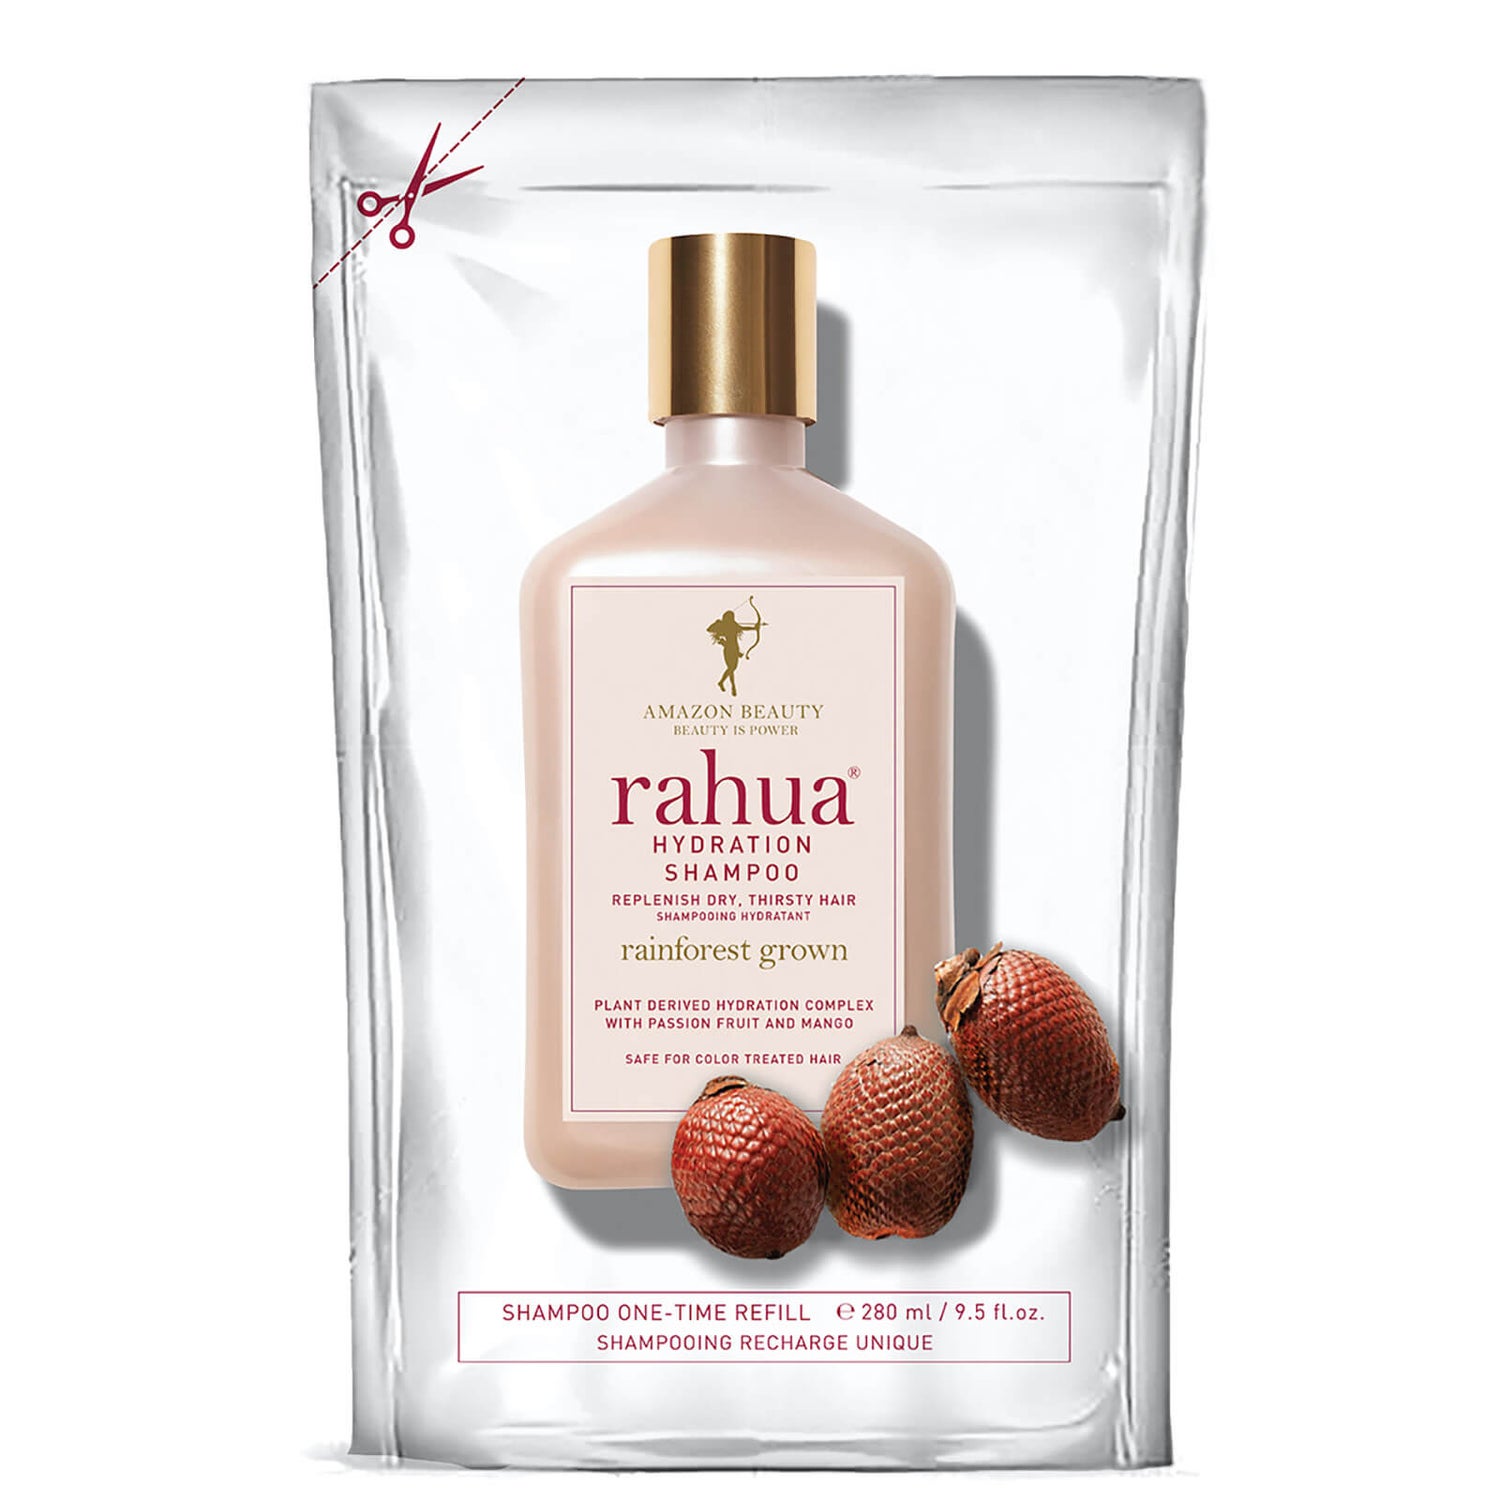 Brandy renæssance Held og lykke Rahua Hydration Shampoo Refill (9.5 fl. oz.) - Dermstore